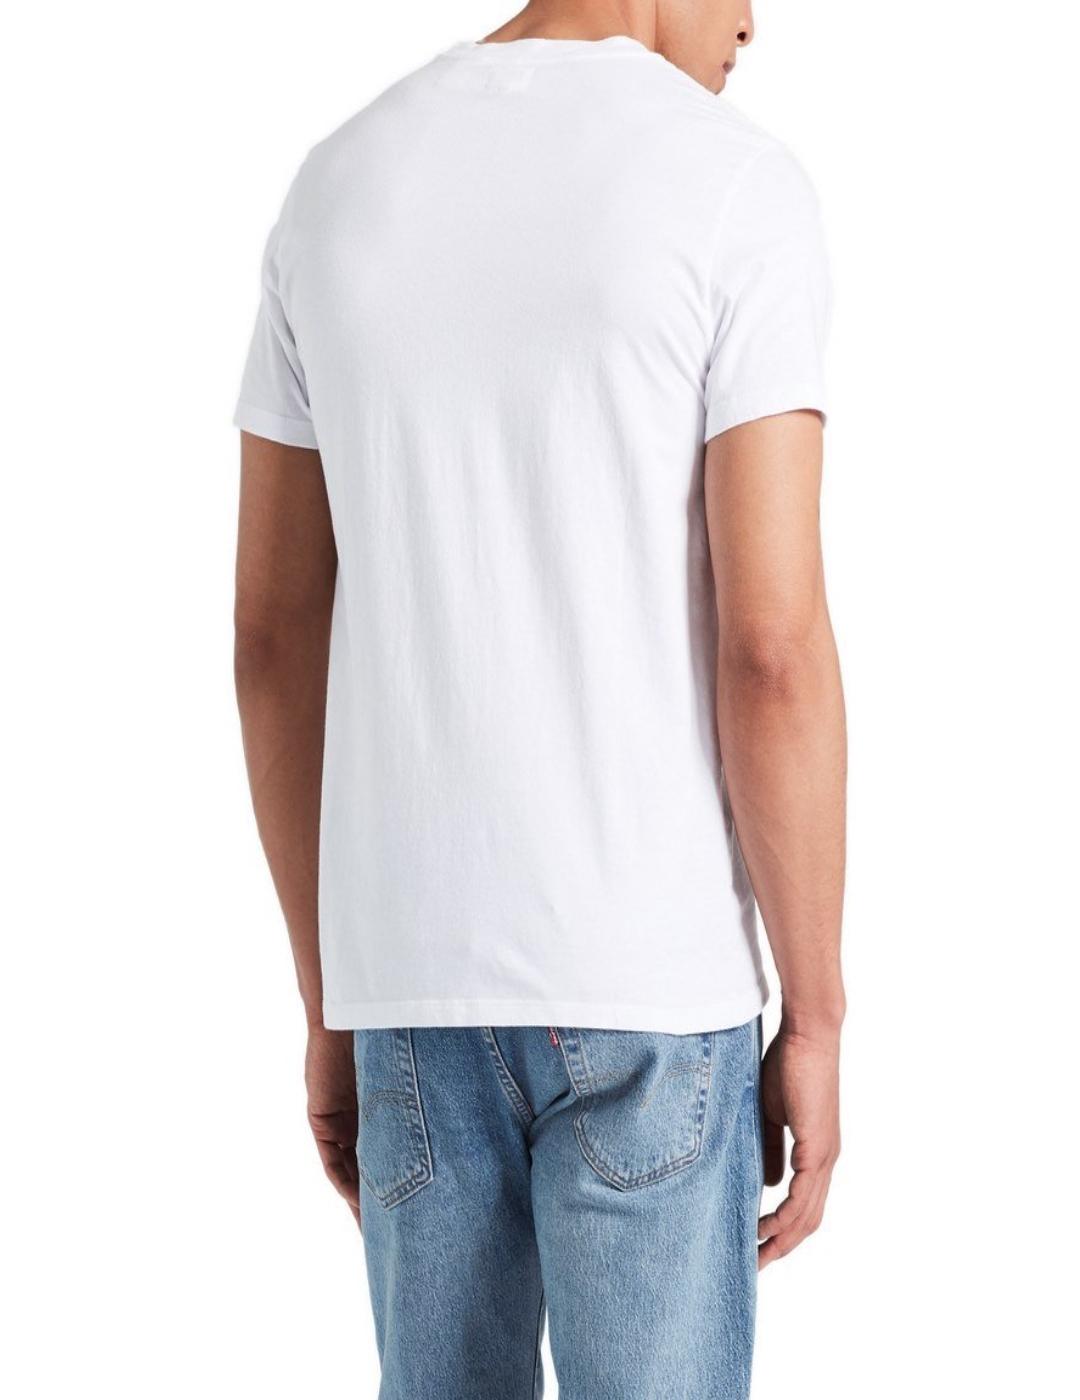 Camiseta Levi´s blanca de manga corta, cuello redondo hombre